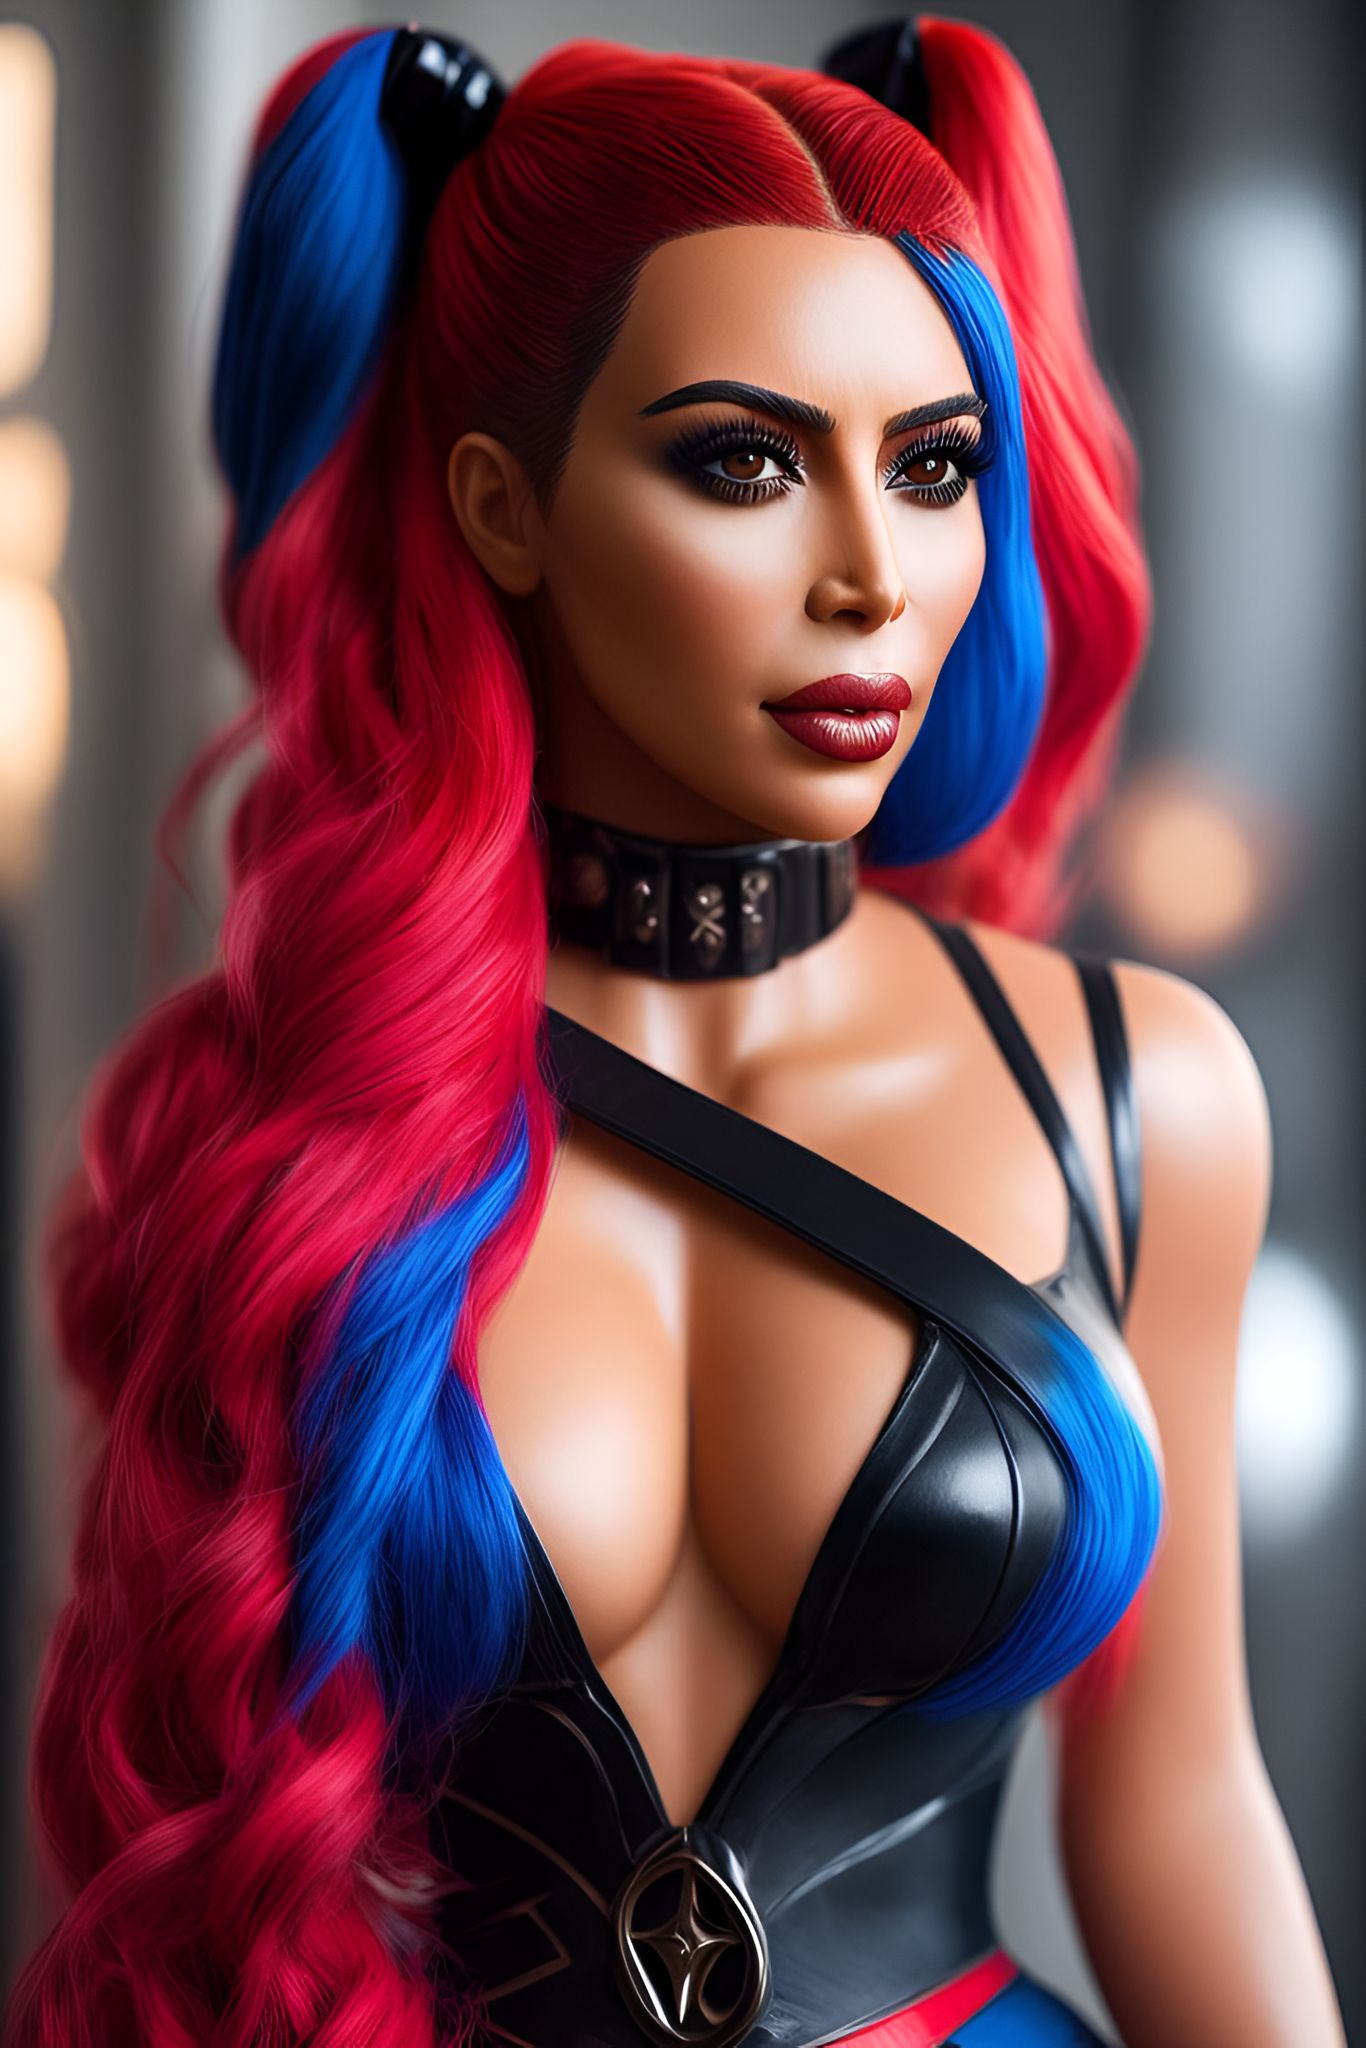 Naglauamorda: Kim Kardashian as Harley Quinn, red and blue hair, strands,  hourglass figure, full body